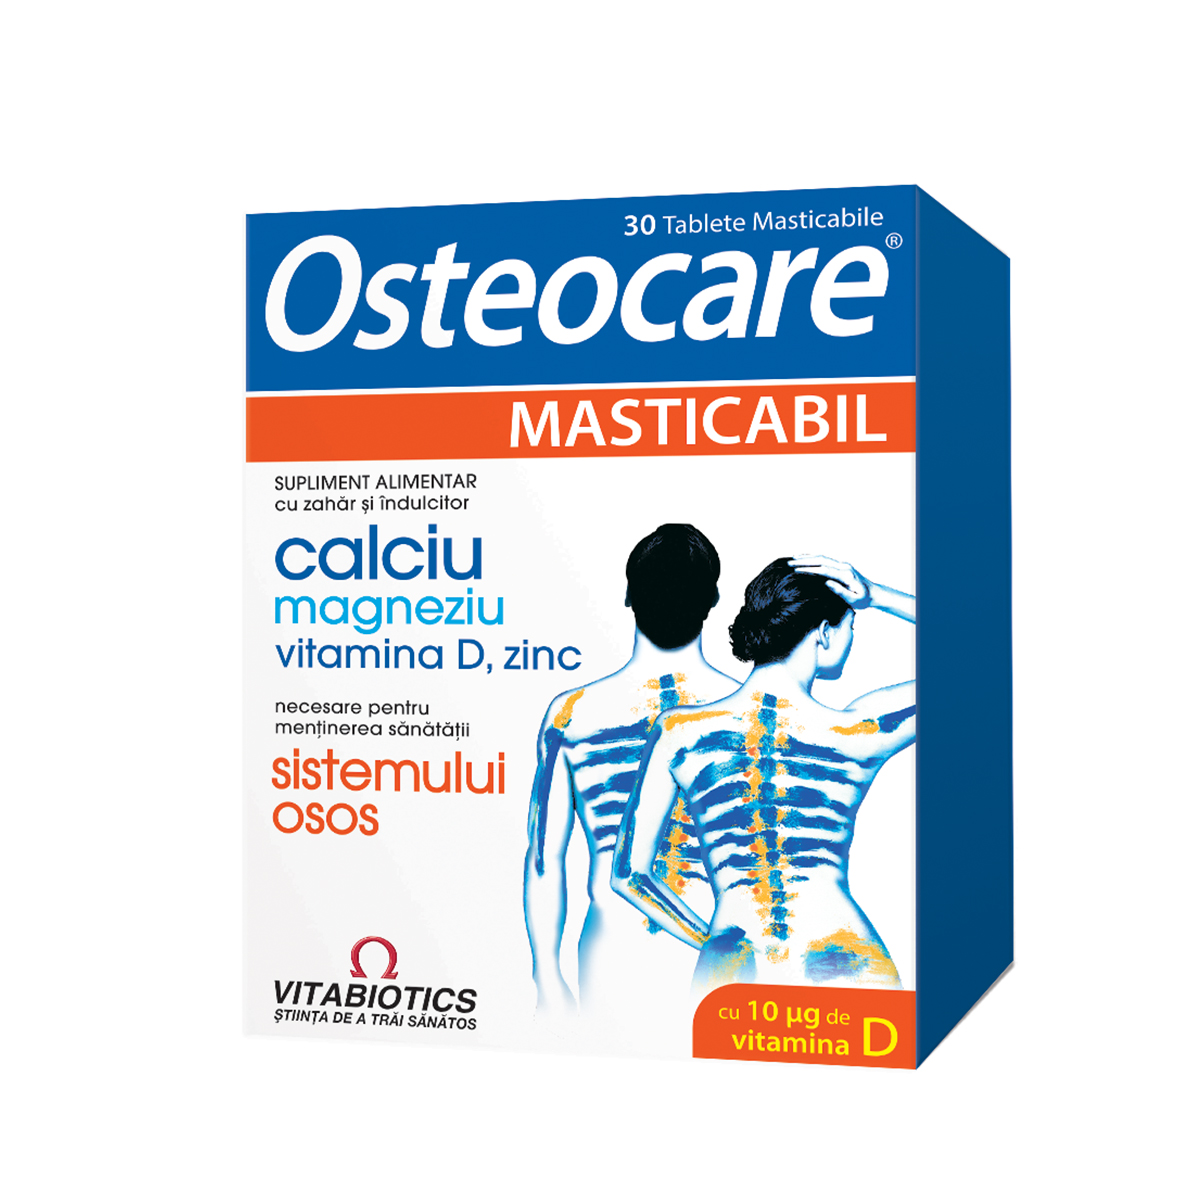 Multivitamine si minerale - Vitabiotics Osteocare x 30 comprimate masticabile, medik-on.ro